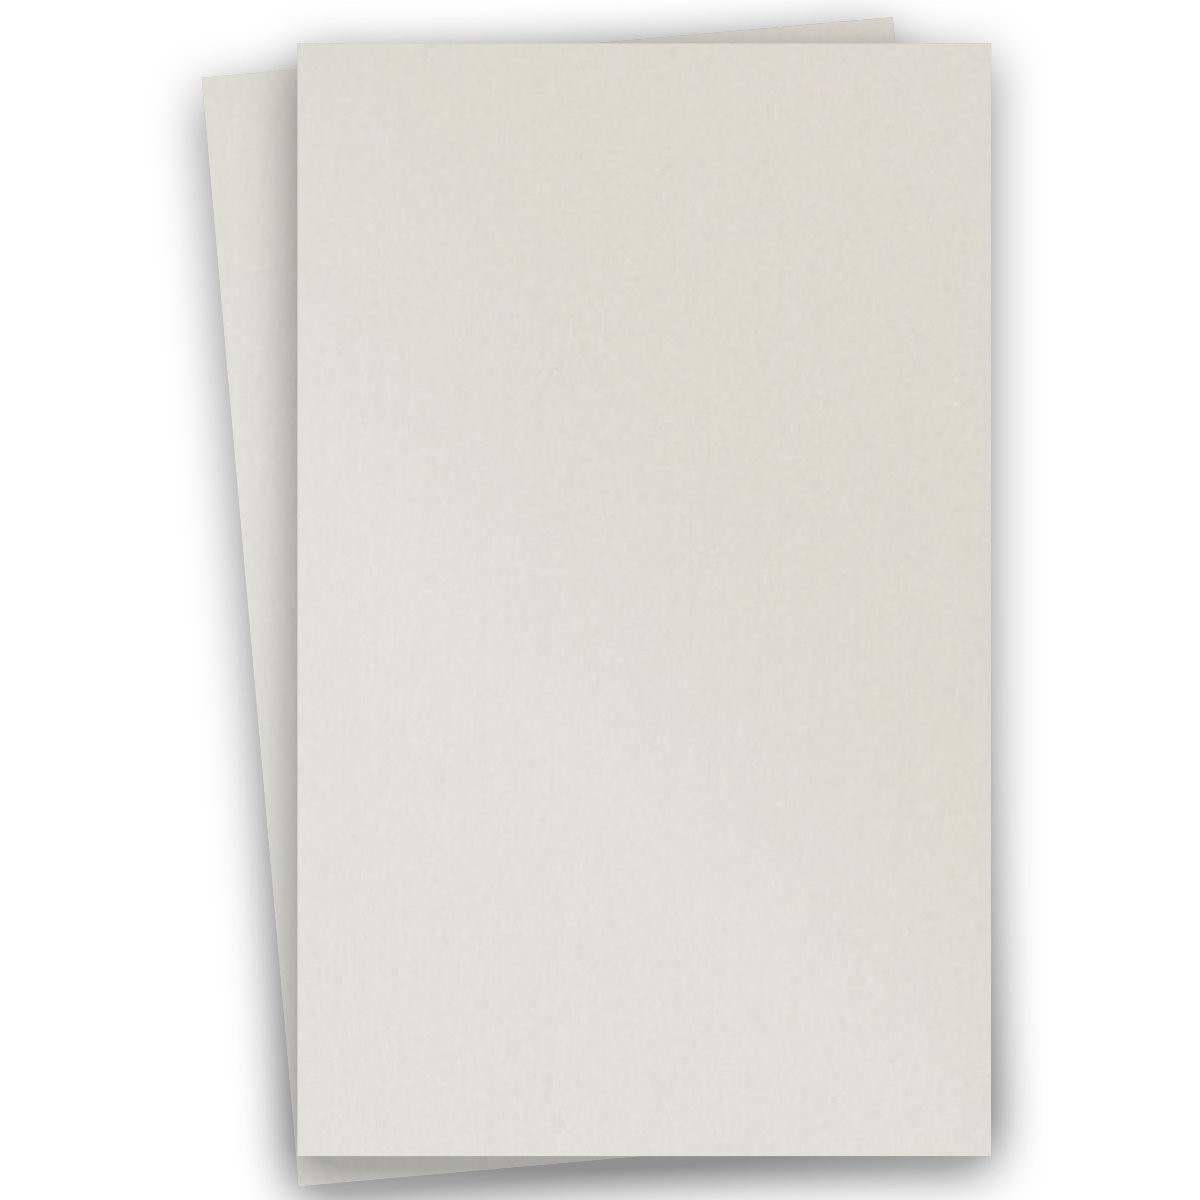 Metallic 11X17 Card Stock Paper QUARTZ 105lb Cover (284gsm) 100 PK Stardream Paper